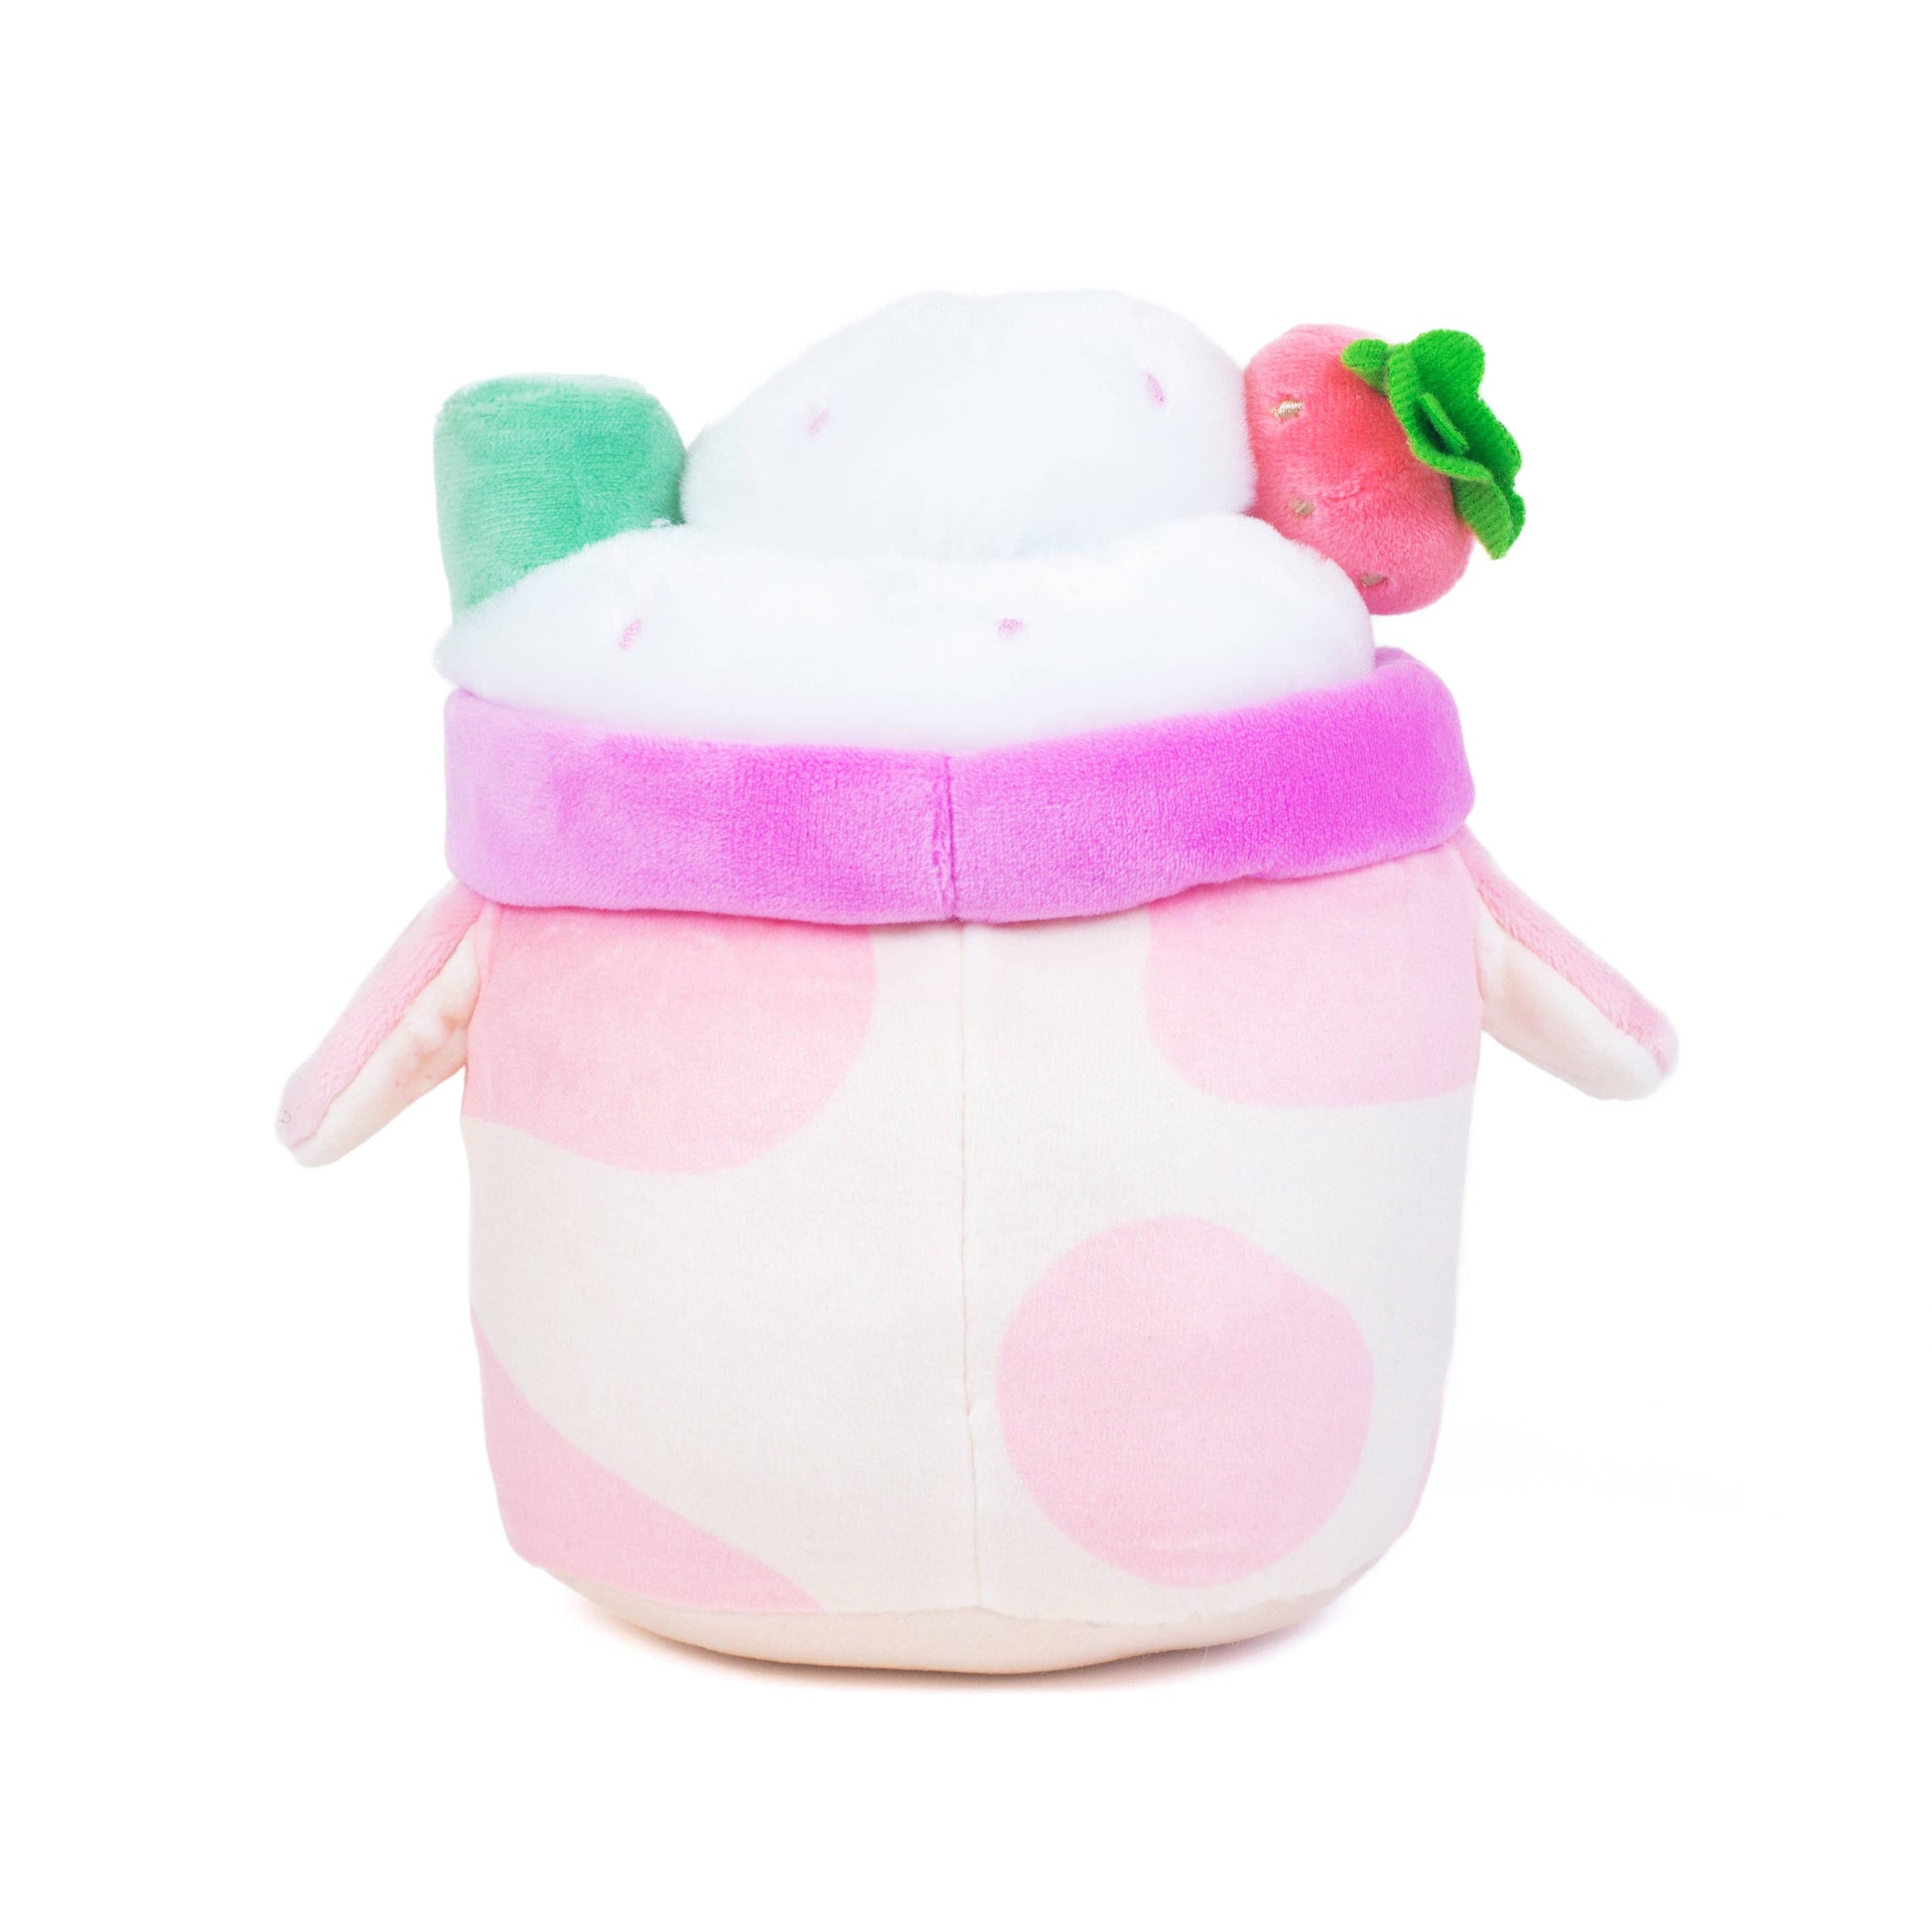 Cuddle Barn, Inc. - Lil Series - Strawberry Mooshake (Strawberry-Scented Plush) - Pink & Blue Kidz Clothing